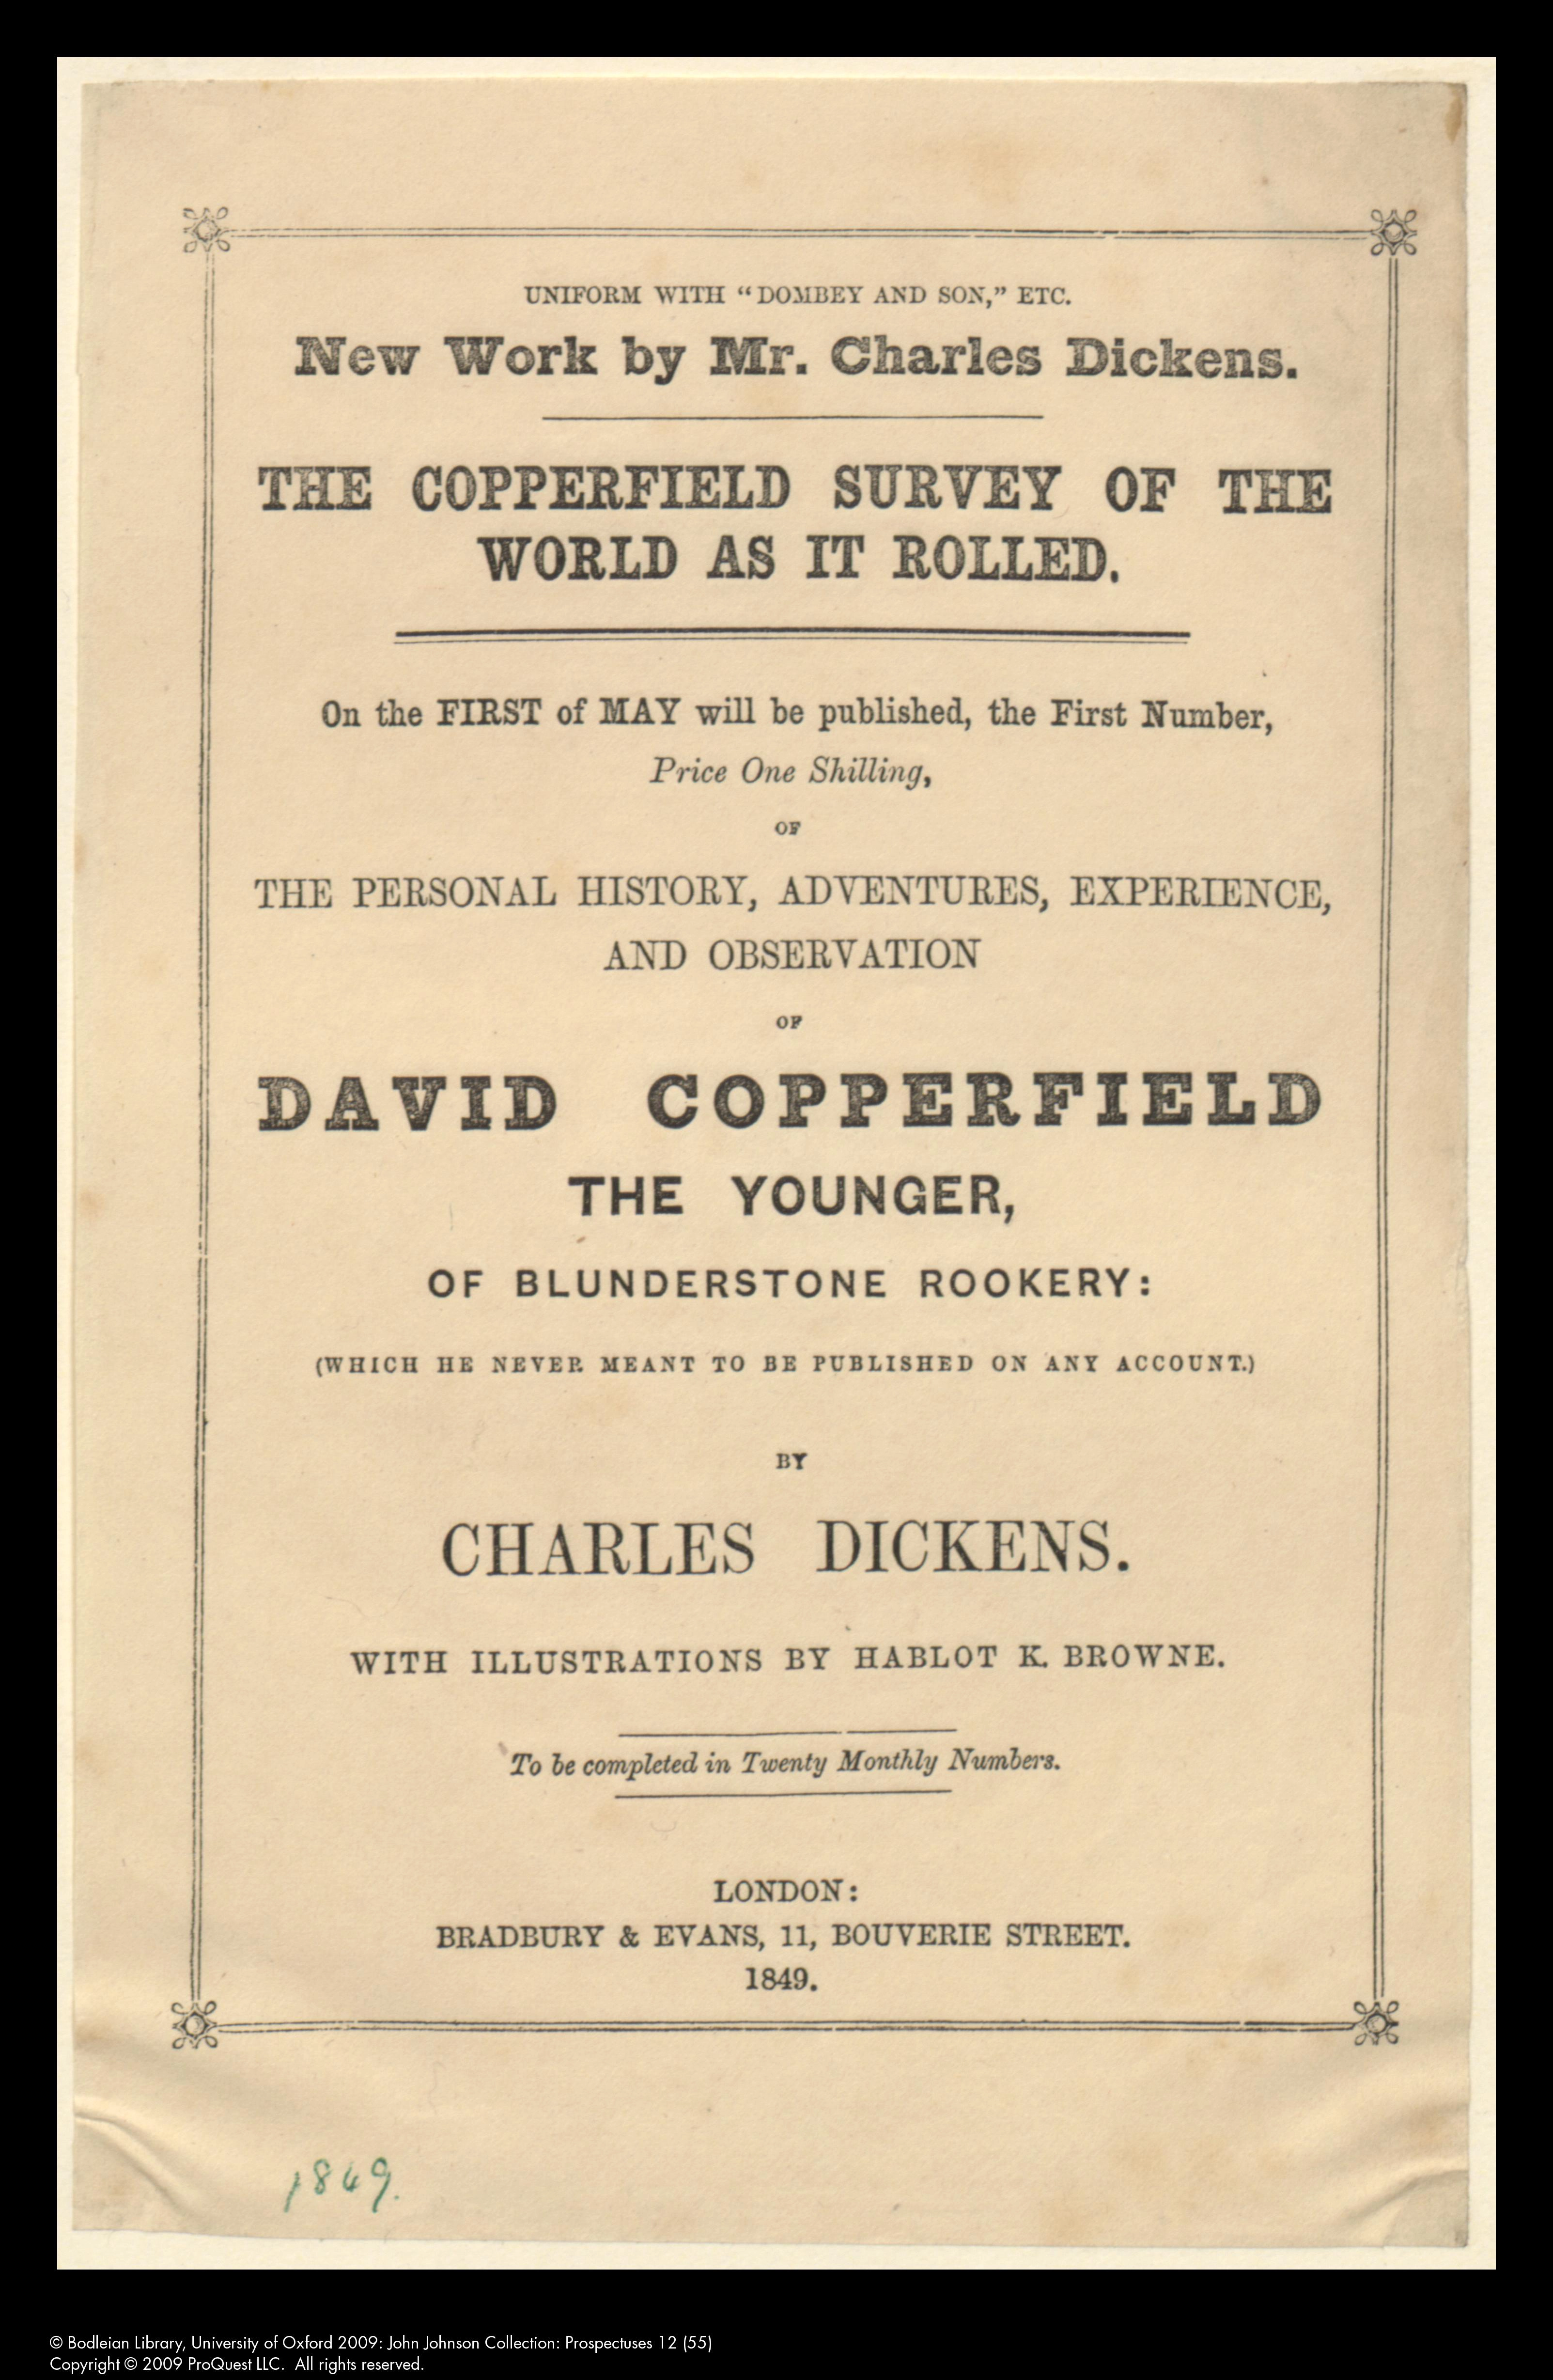 Survey handbill for David Copperfield from the John Johnson Collection.